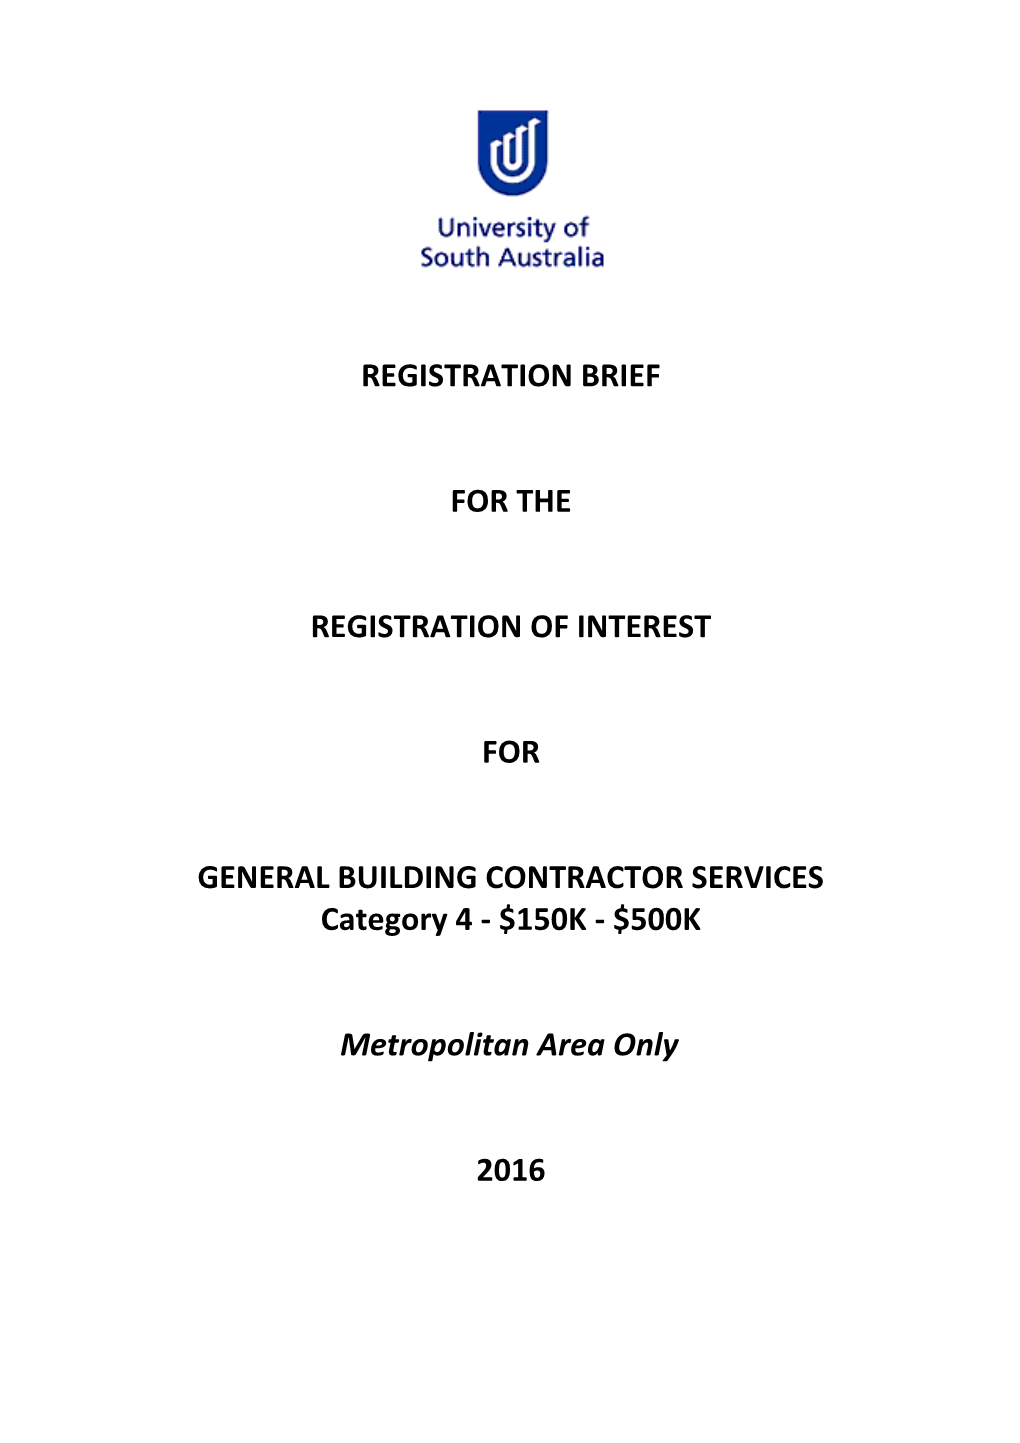 Registration of Interest for General Building Contractor Services Category 4 - $150K - $500K